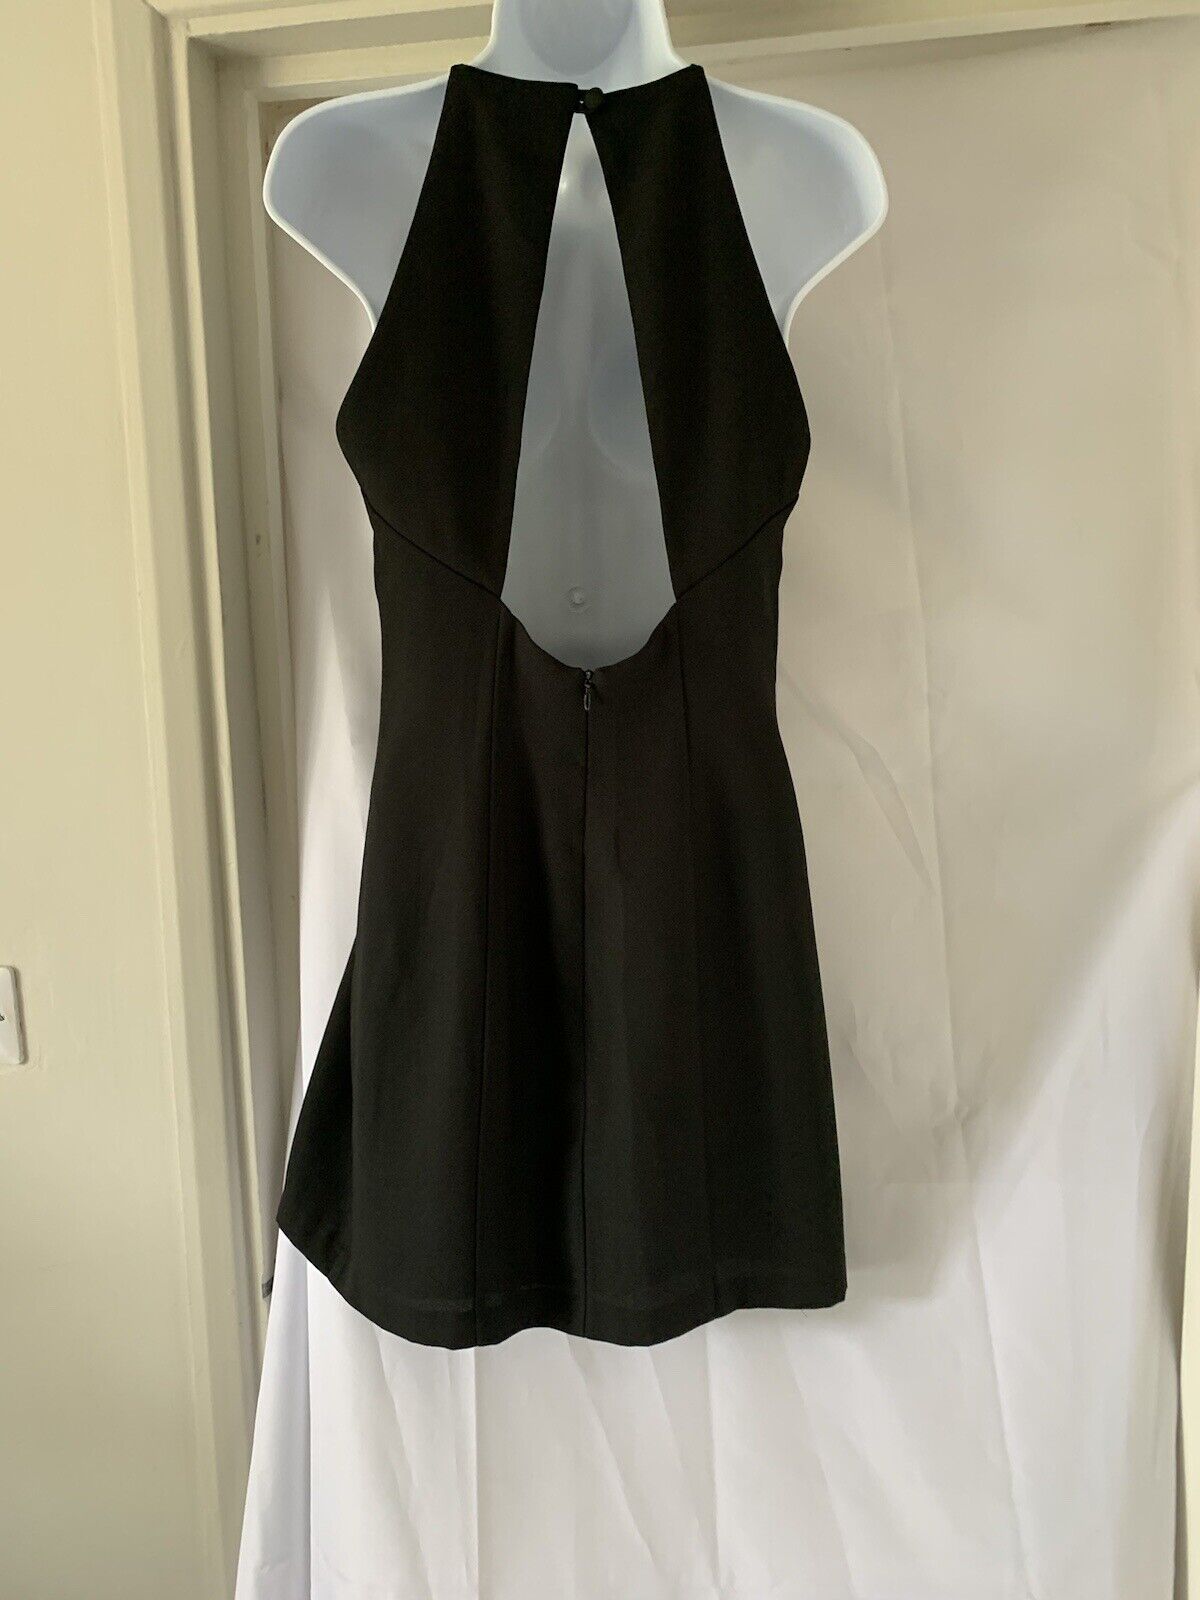 JOSEPH RIBKOFF Creations Black Dress Size 10 VGC - image 2